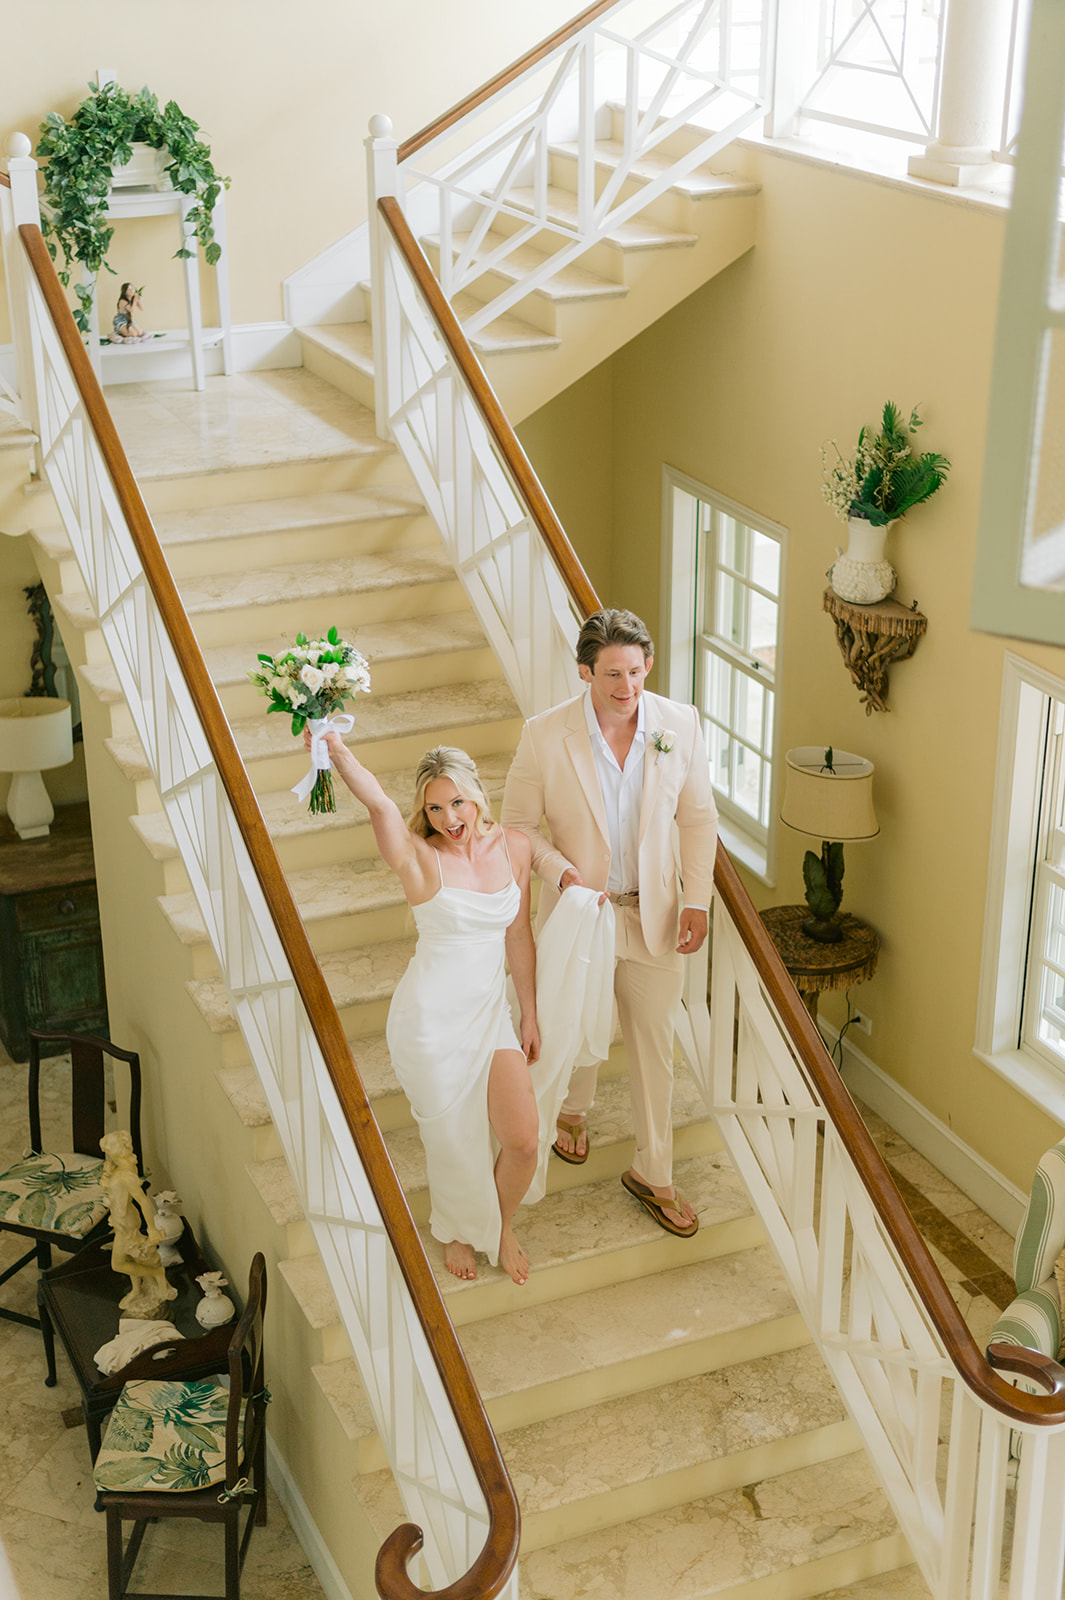 Stunning wedding videography at Antigua's luxury villas
